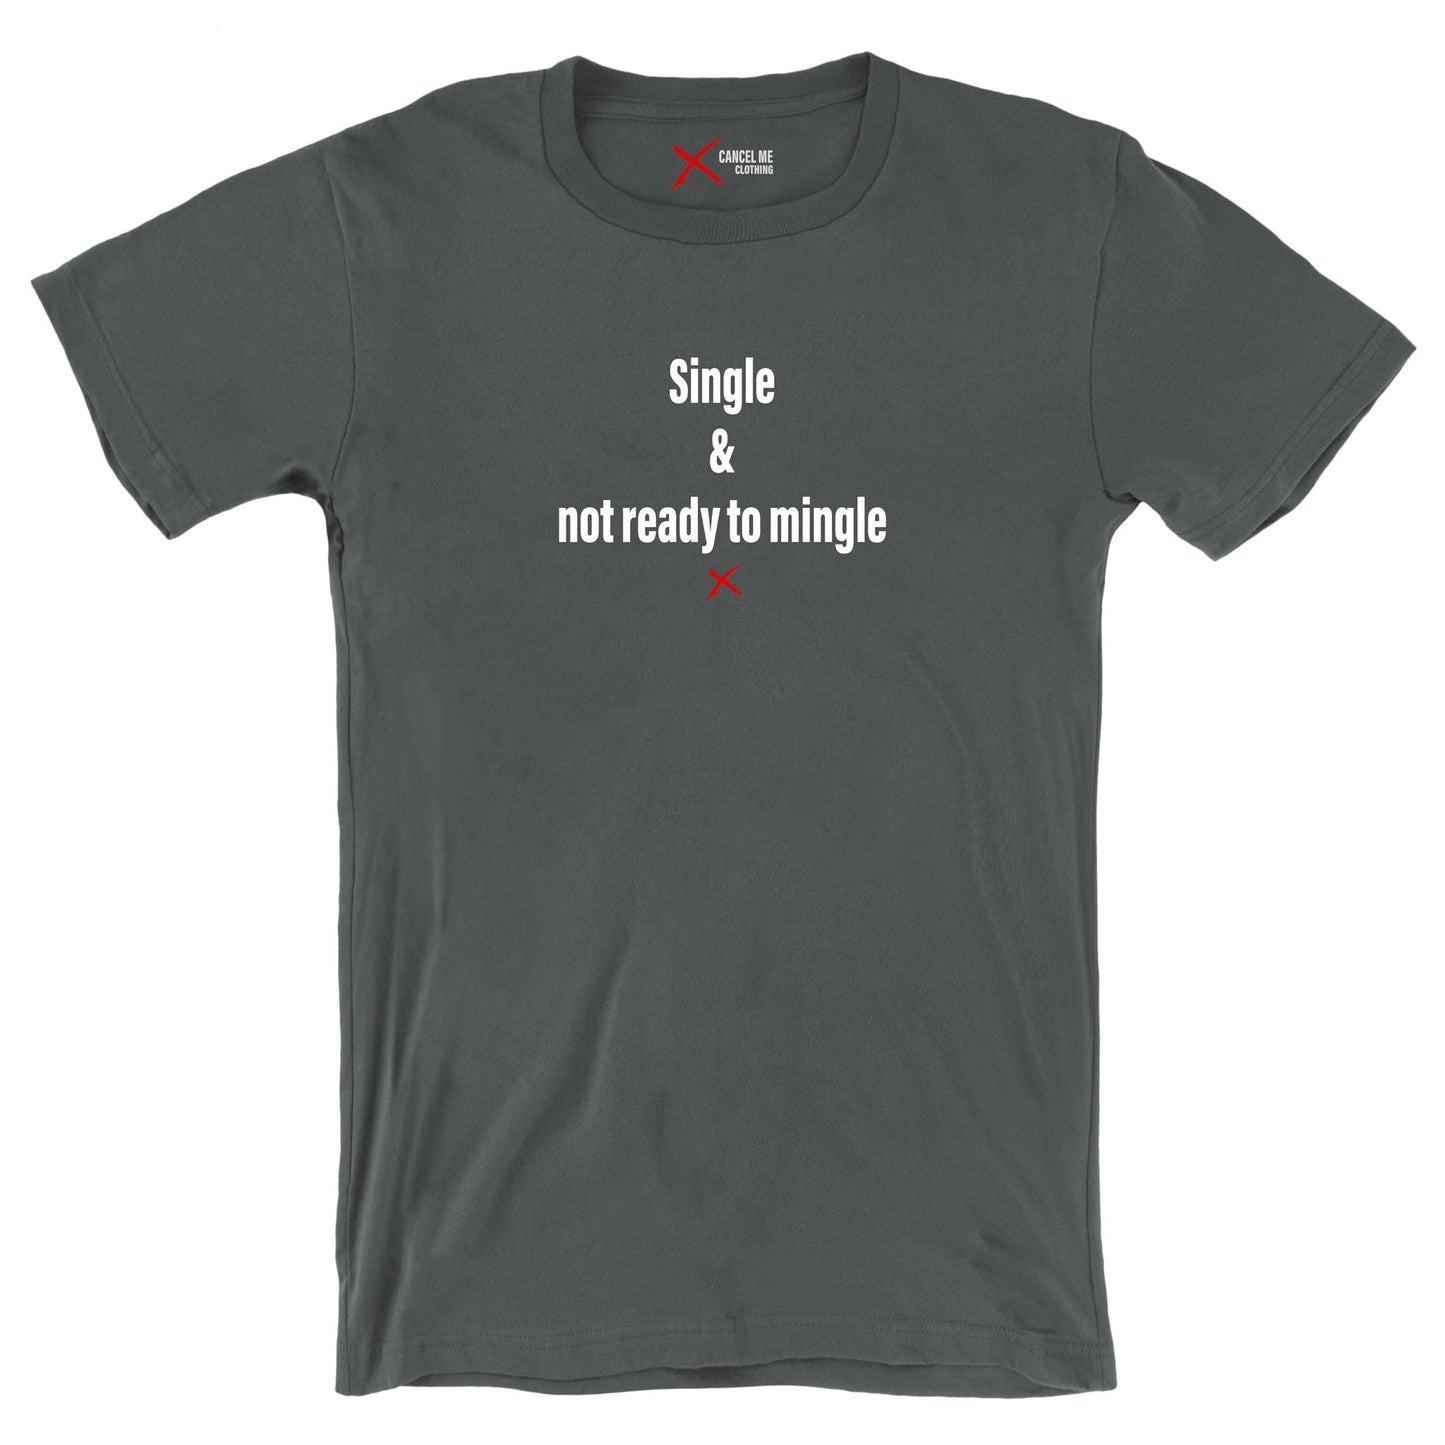 Single & not ready to mingle - Shirt